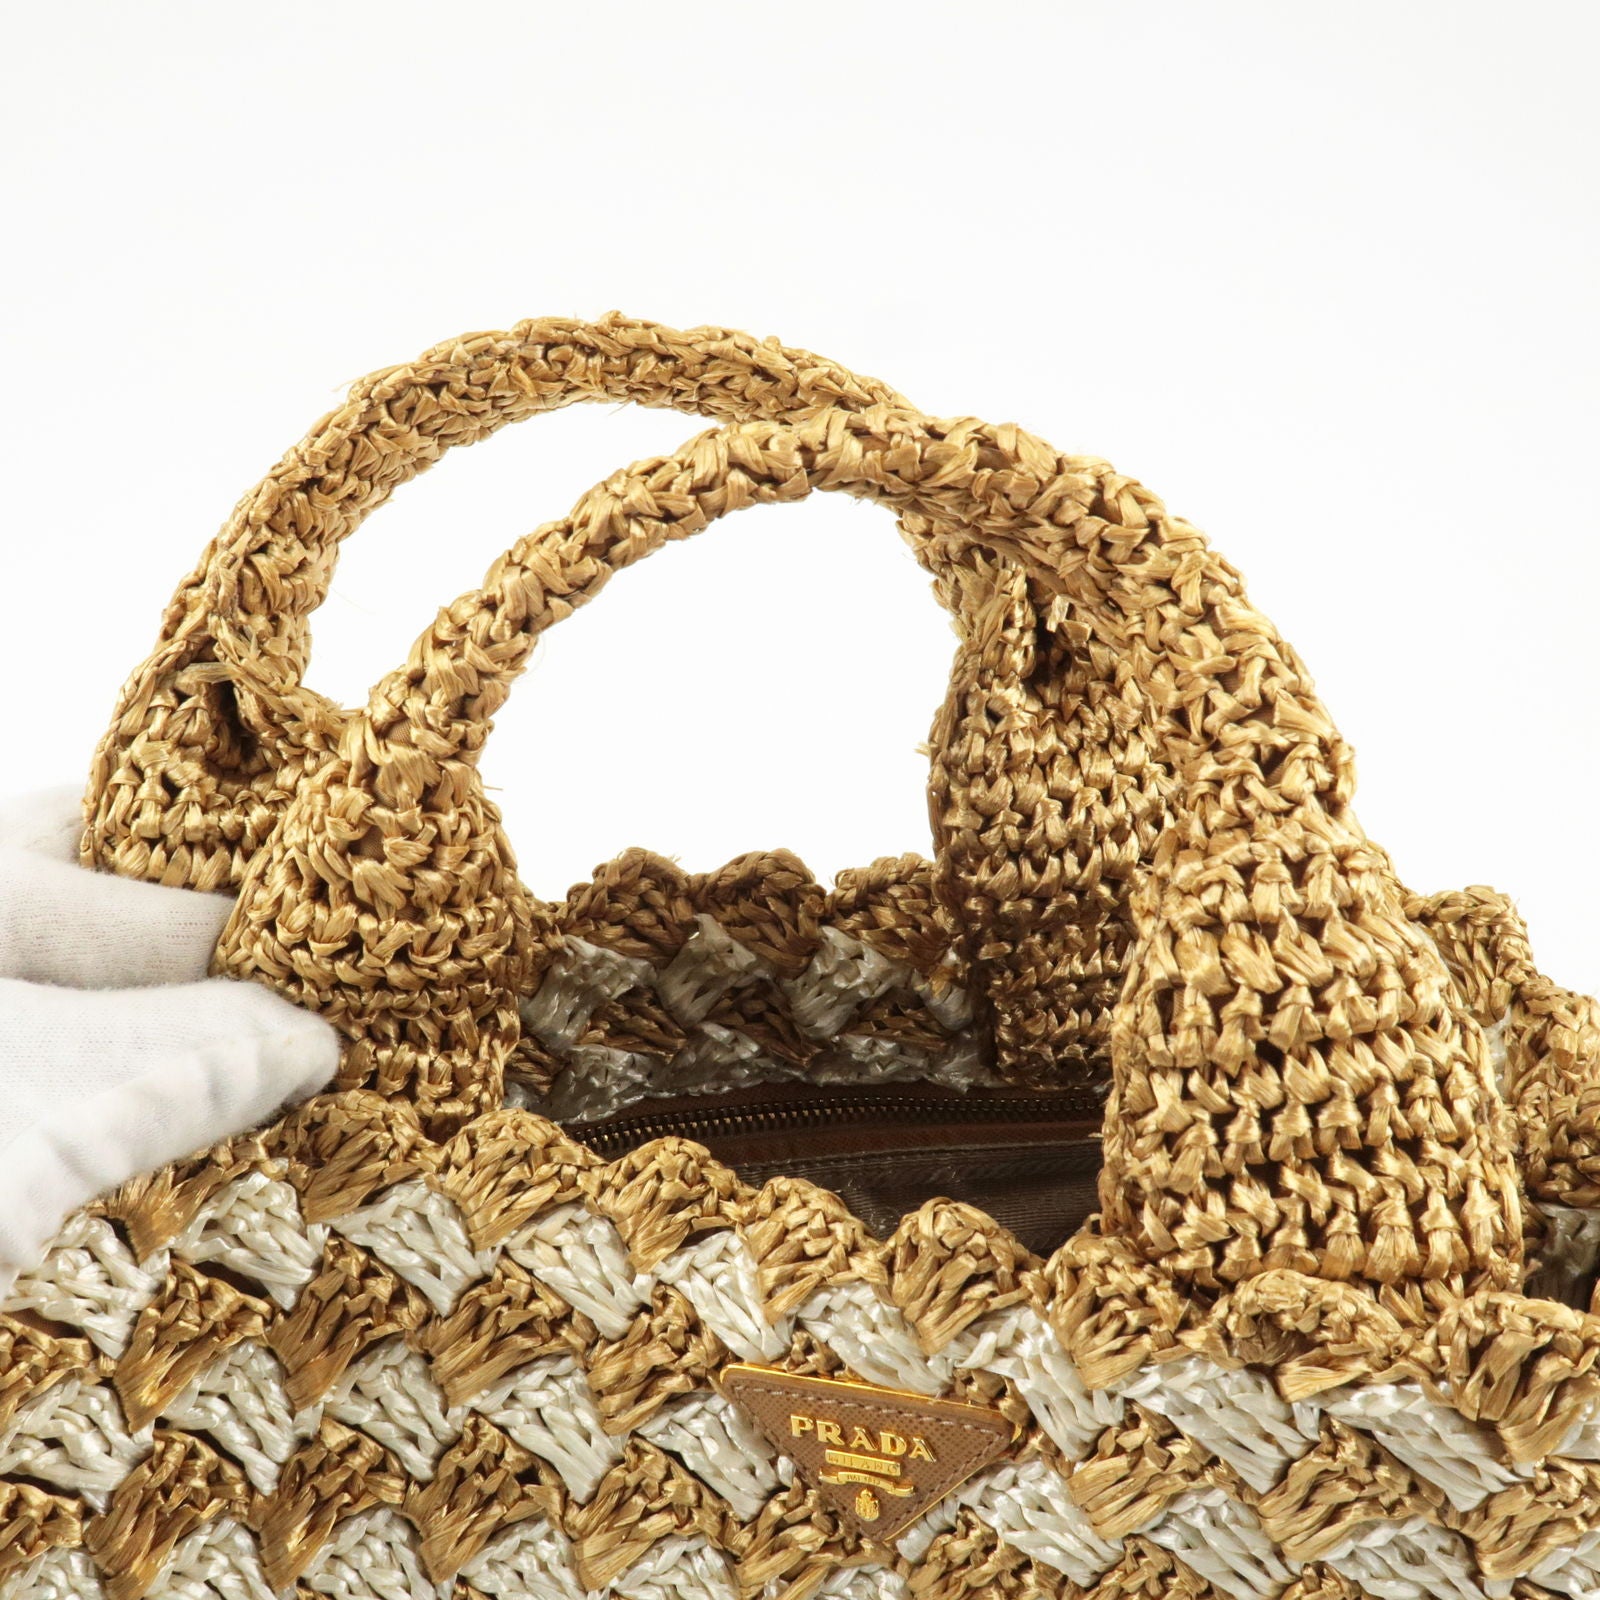 Prada Crochet Bag in Metallic